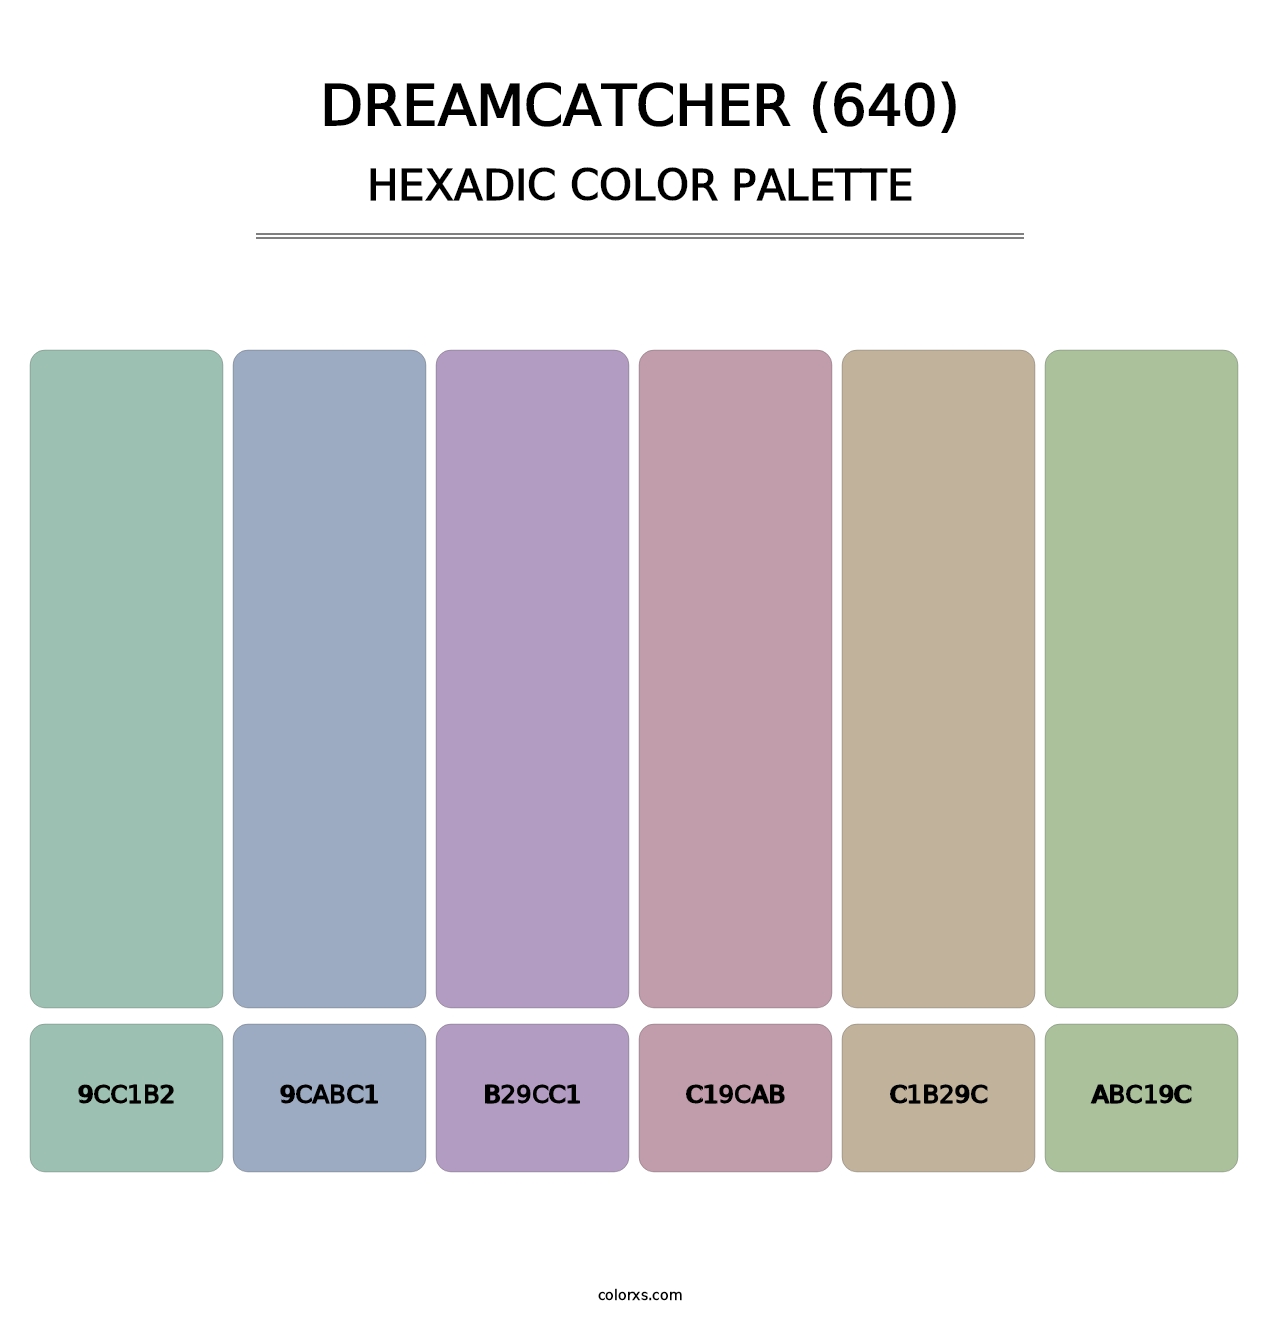 Dreamcatcher (640) - Hexadic Color Palette